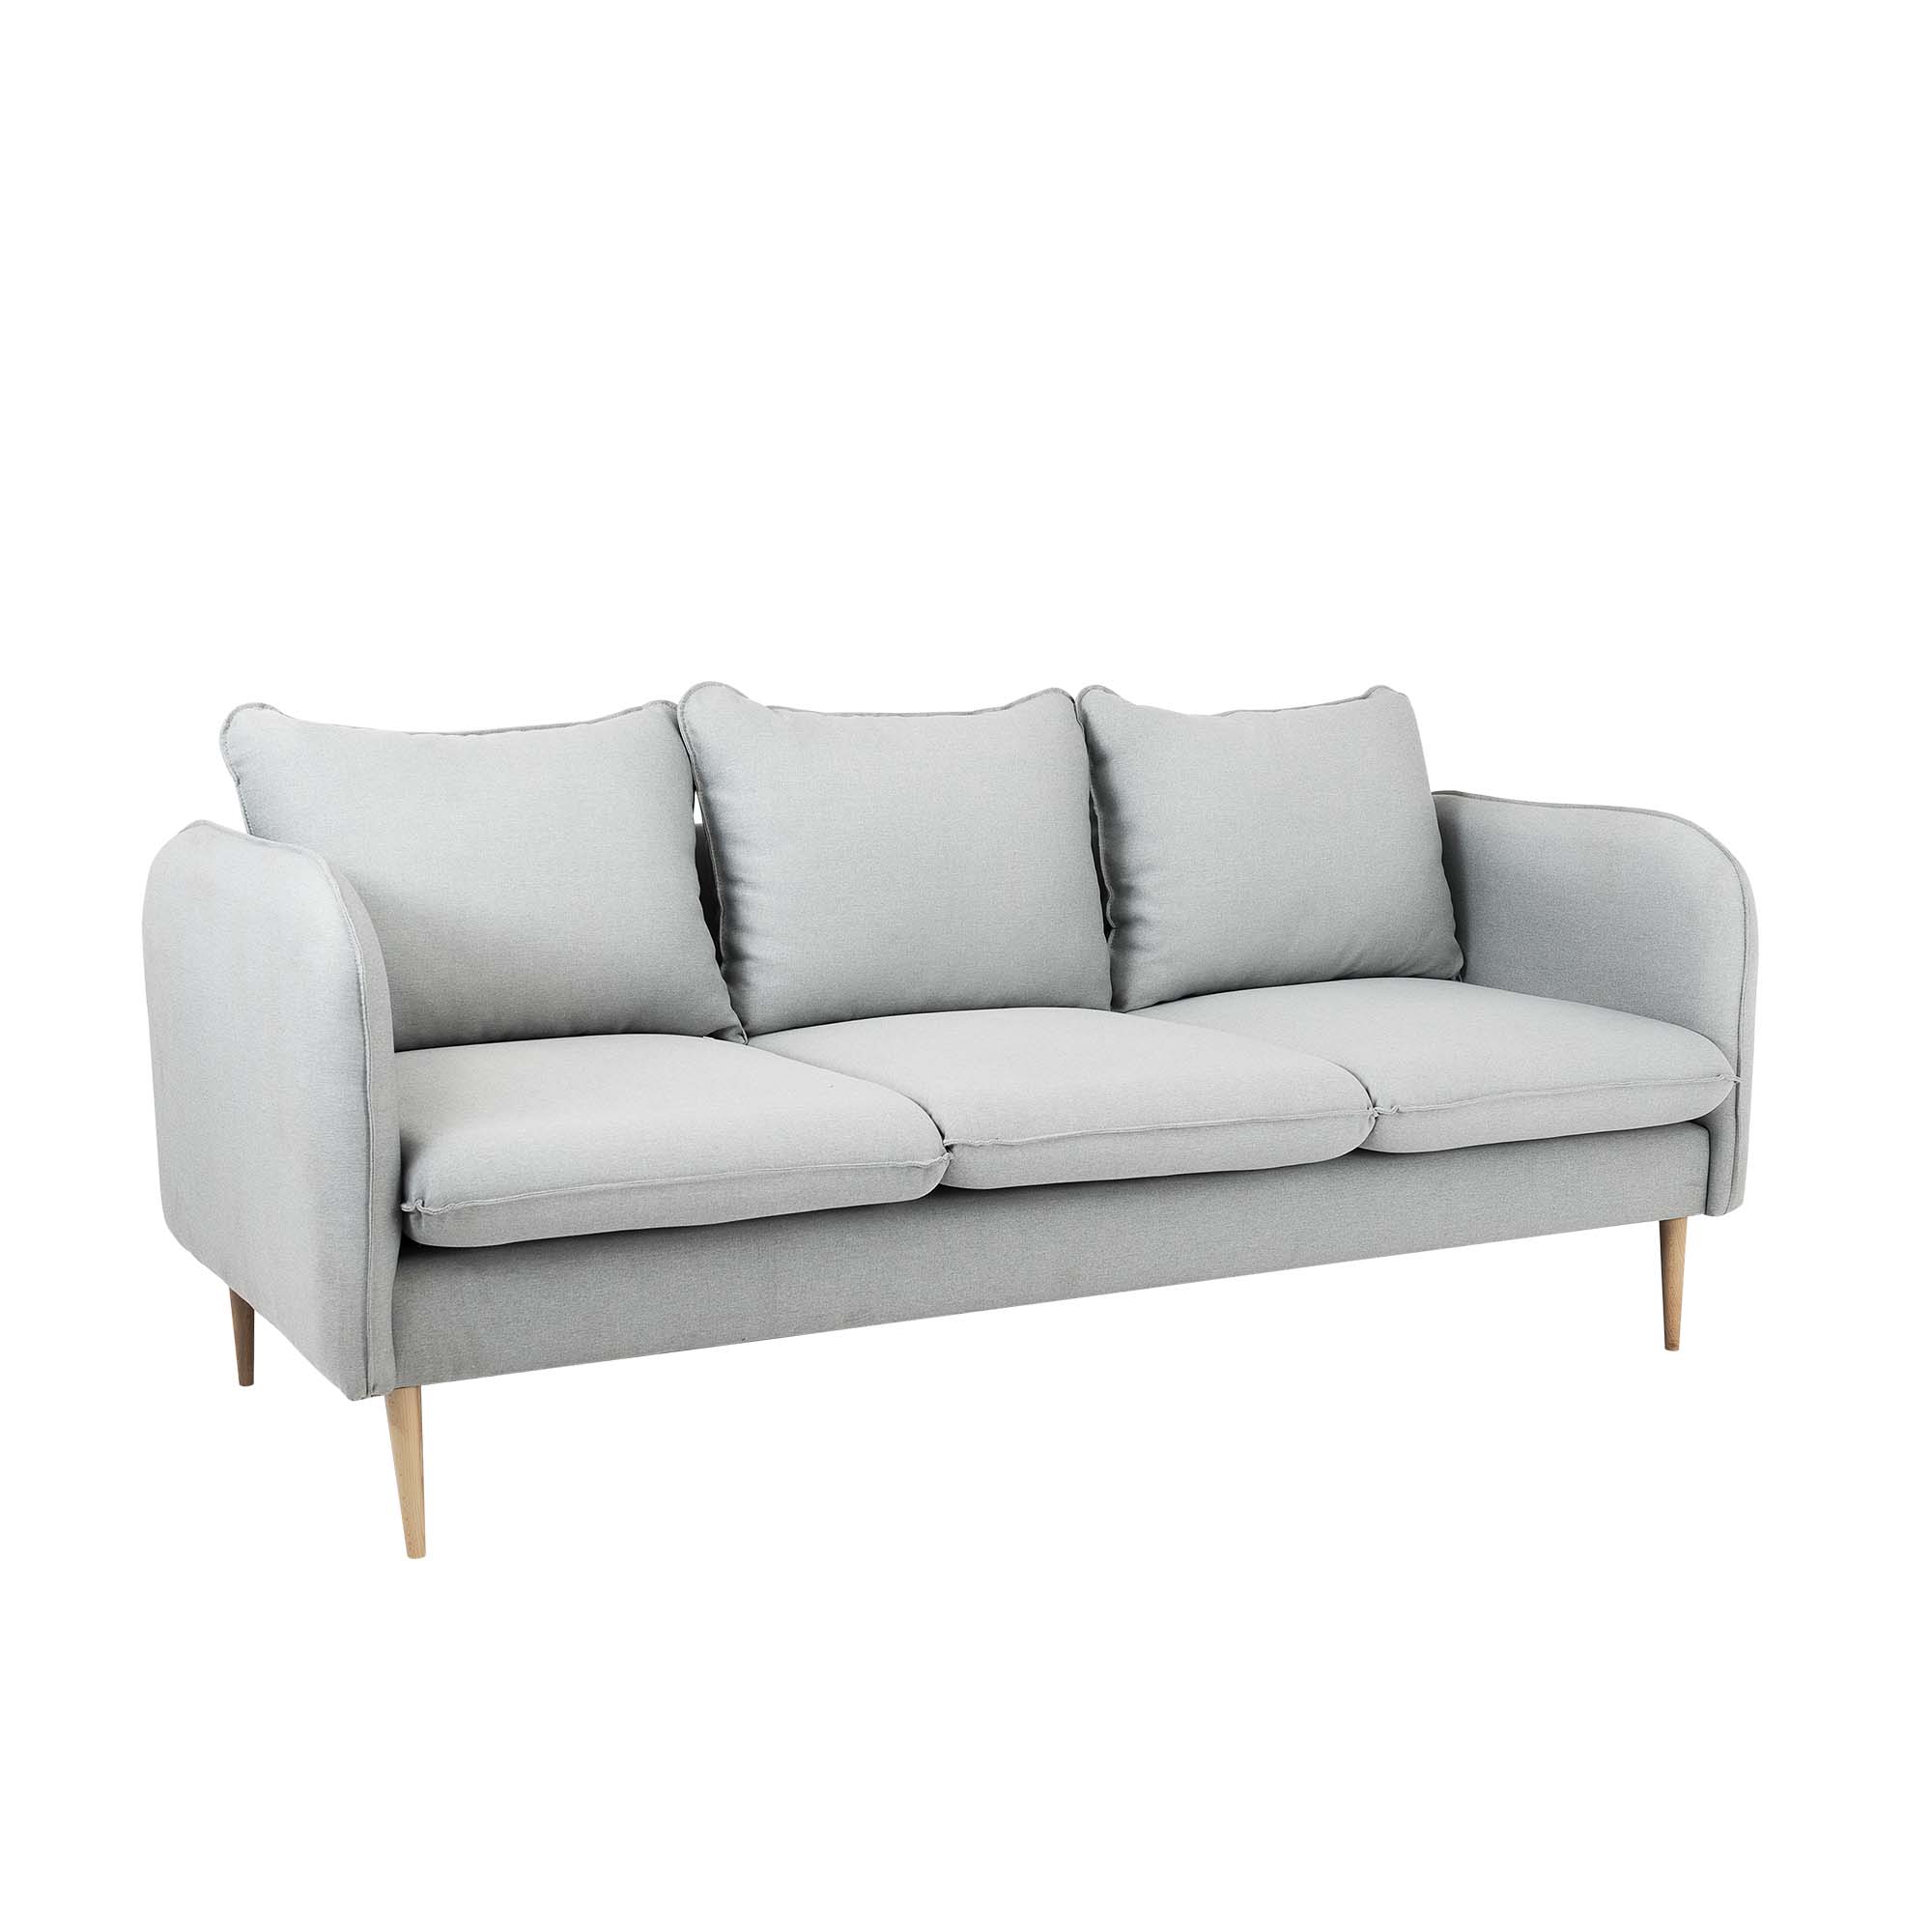 POSH WOOD Sofa 3 Seaters upholstery colour platinum grey